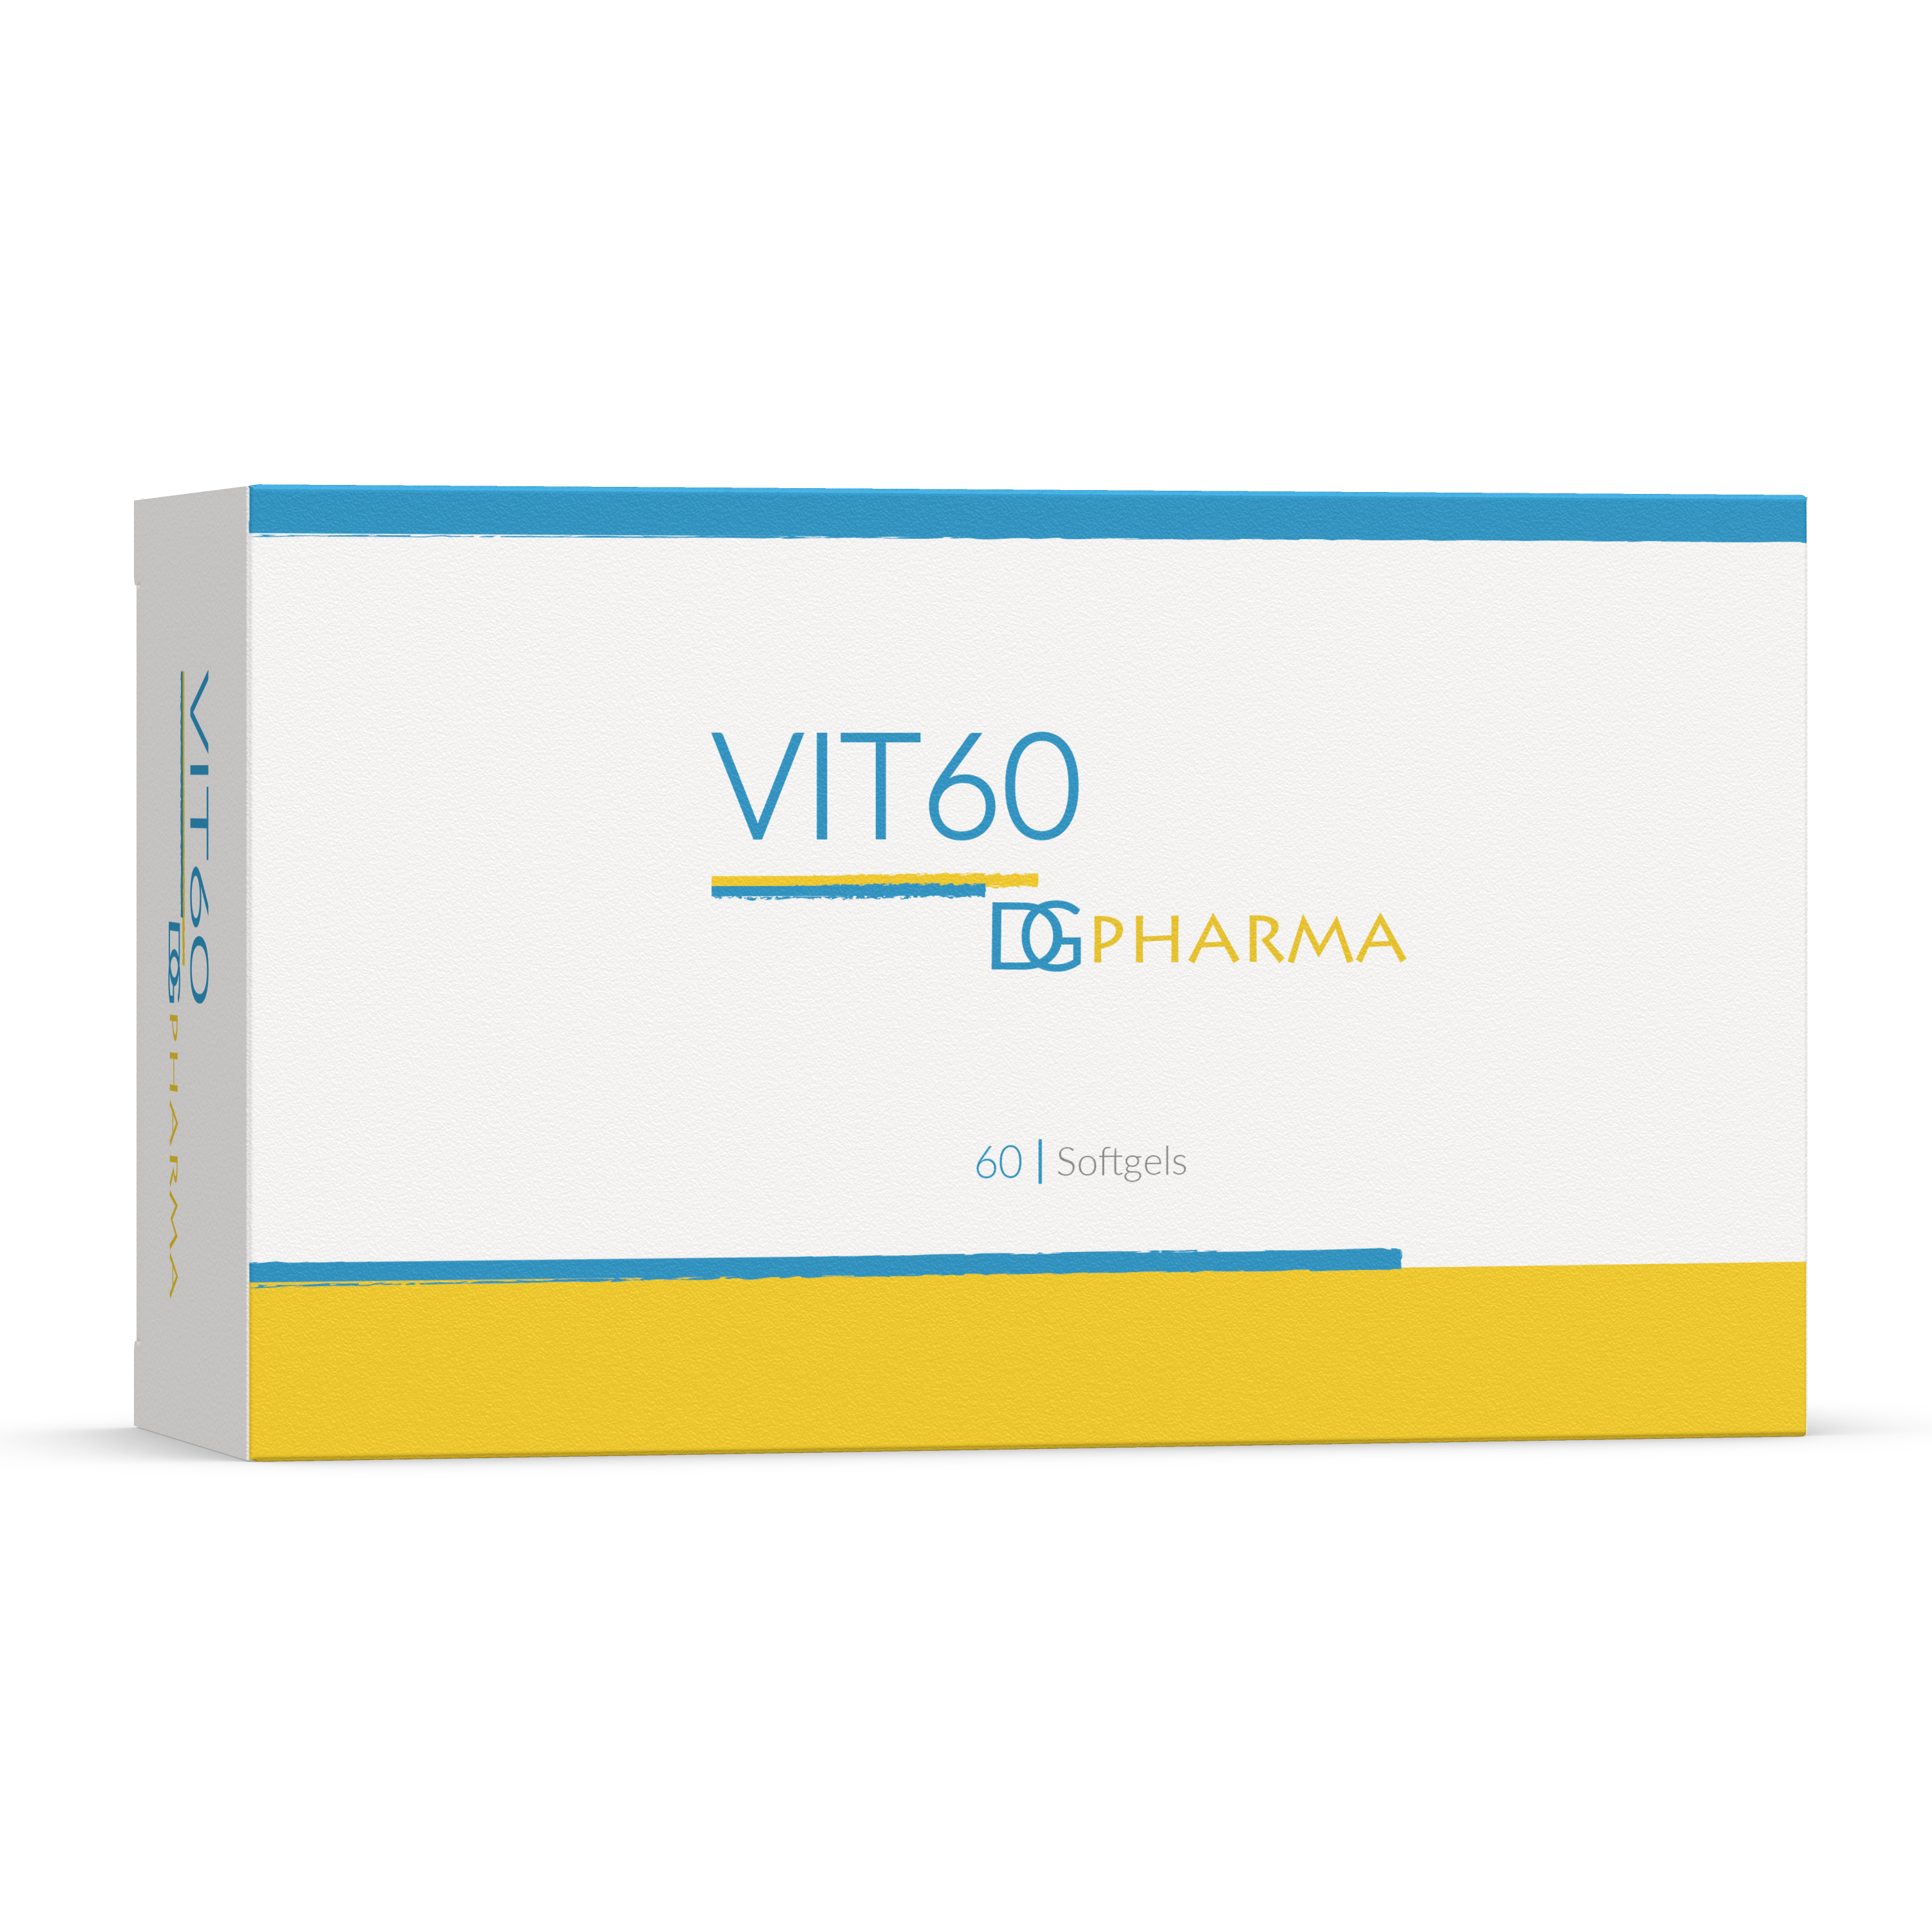 VIT60 - Vervangt VIT20 en bevat 60 softgels in plaats van 20 softgels